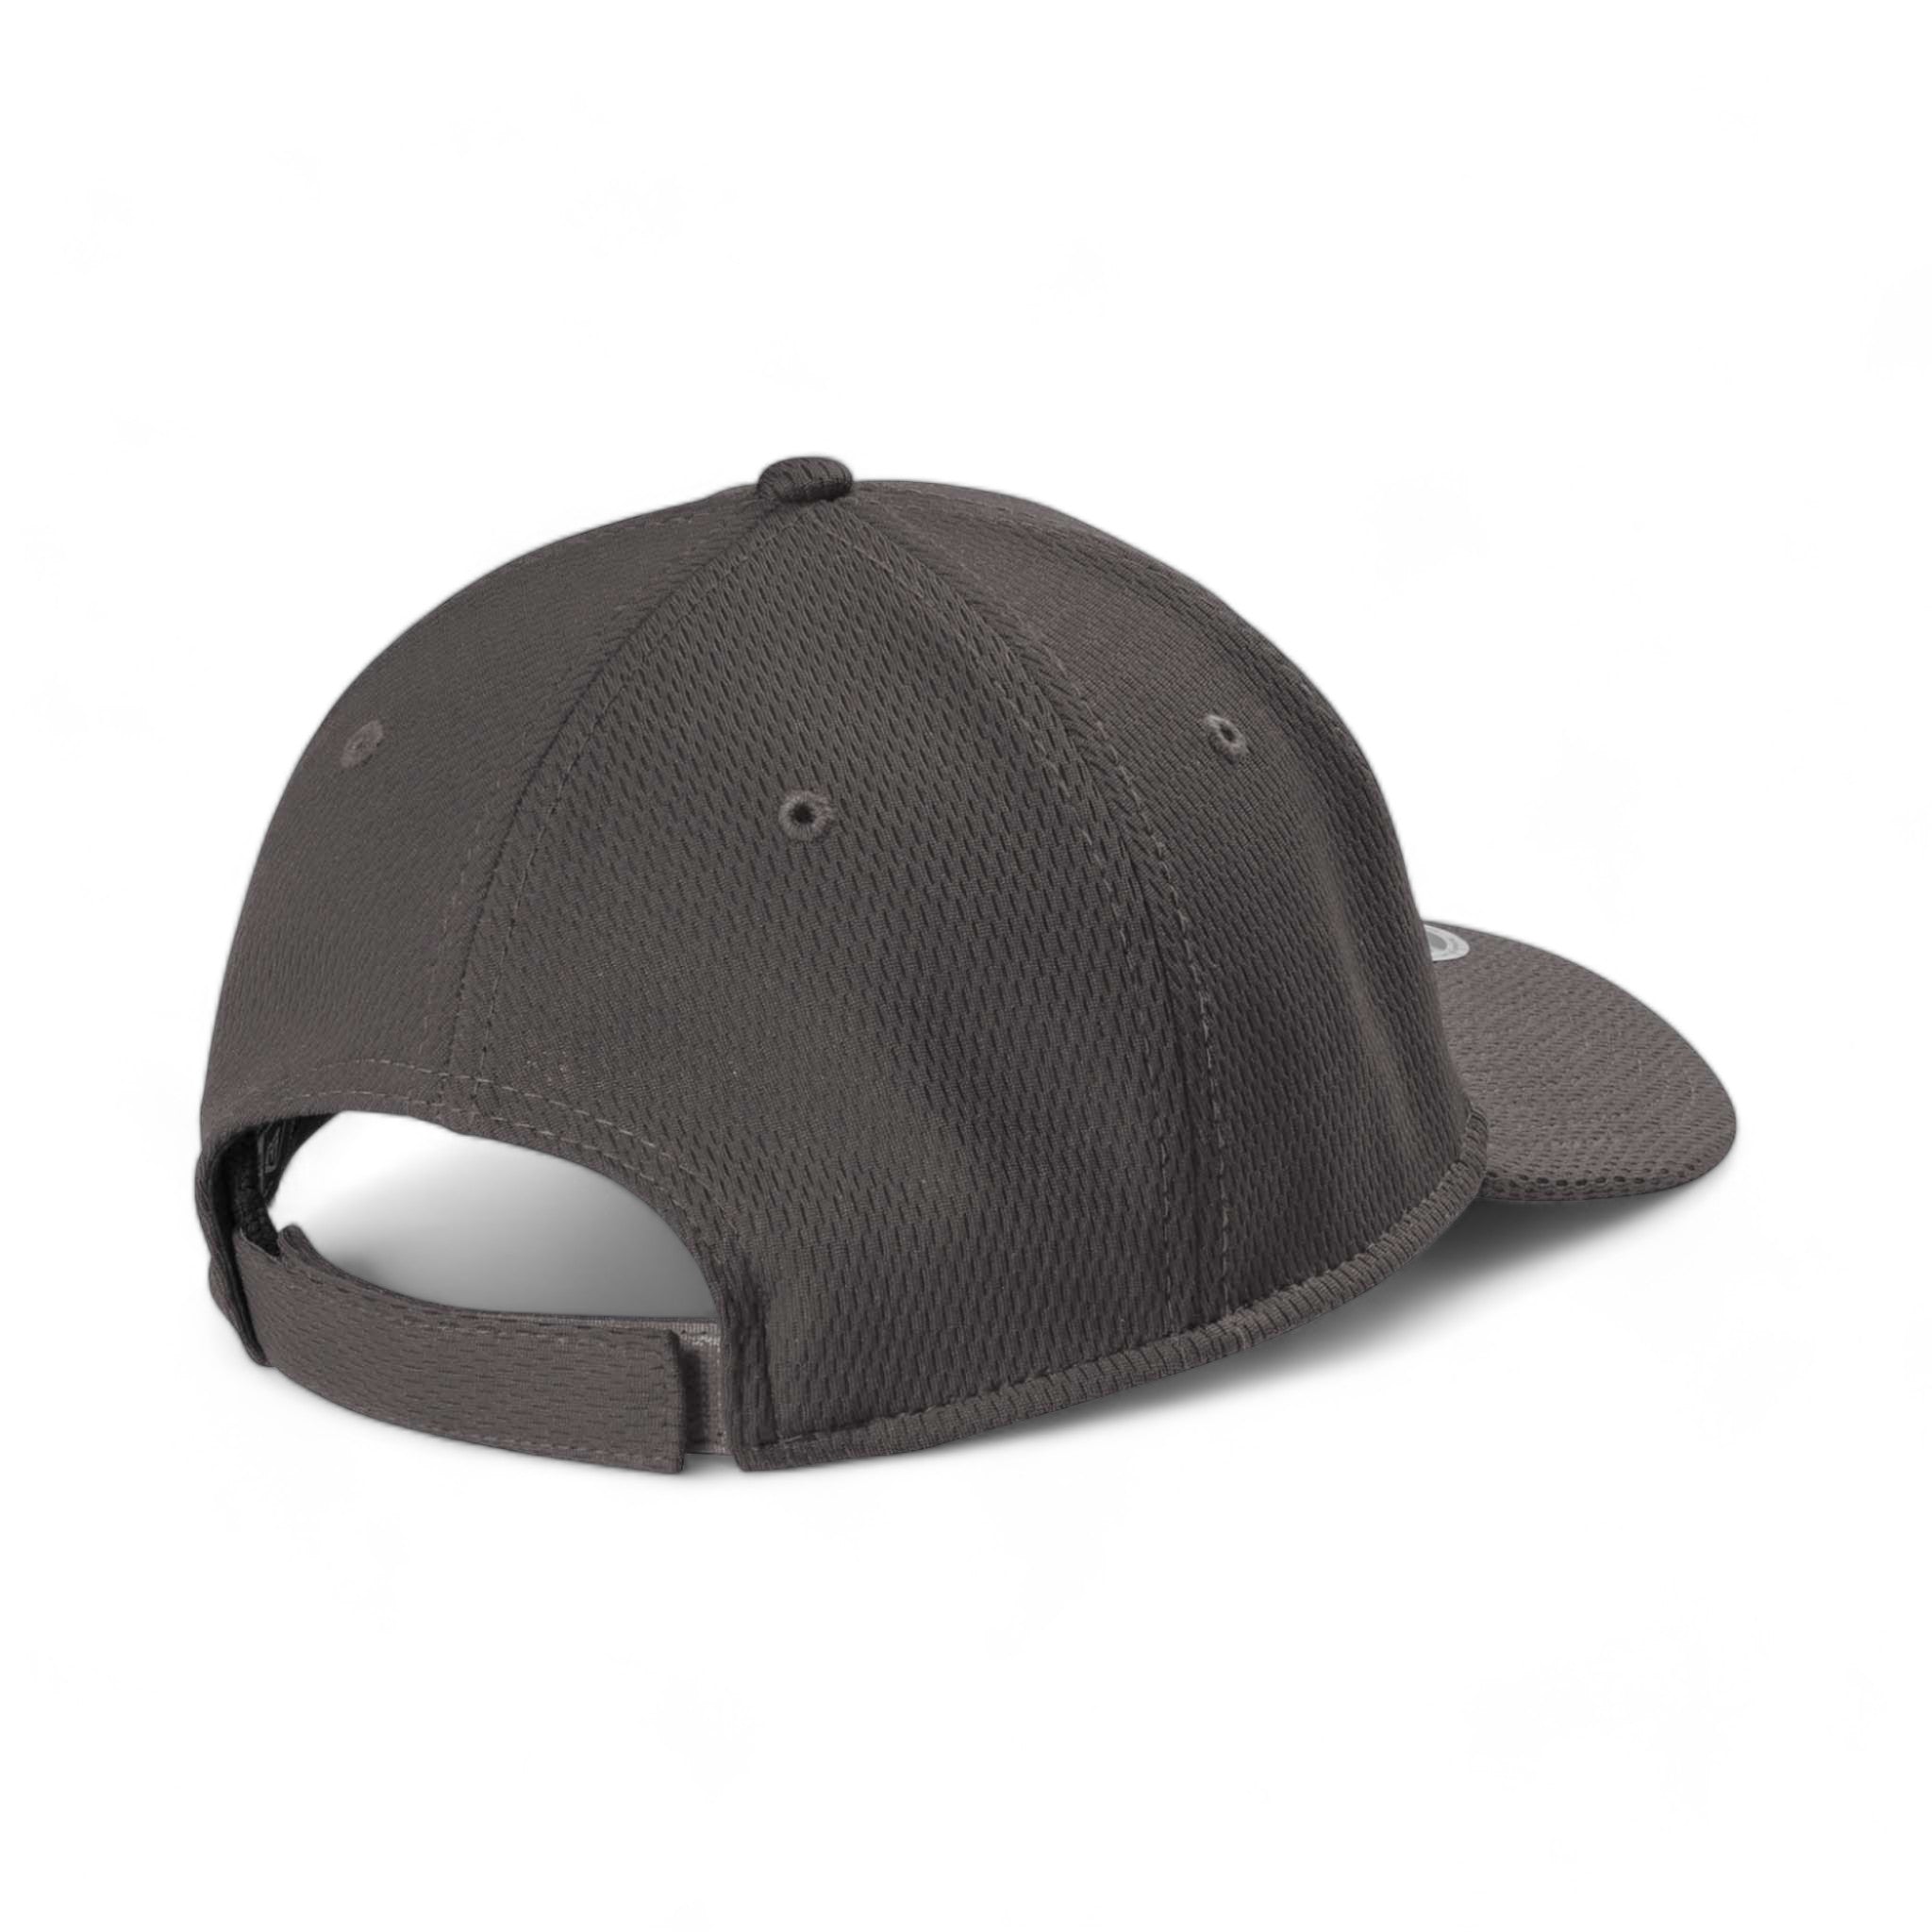 Back view of New Era NE209 custom hat in graphite